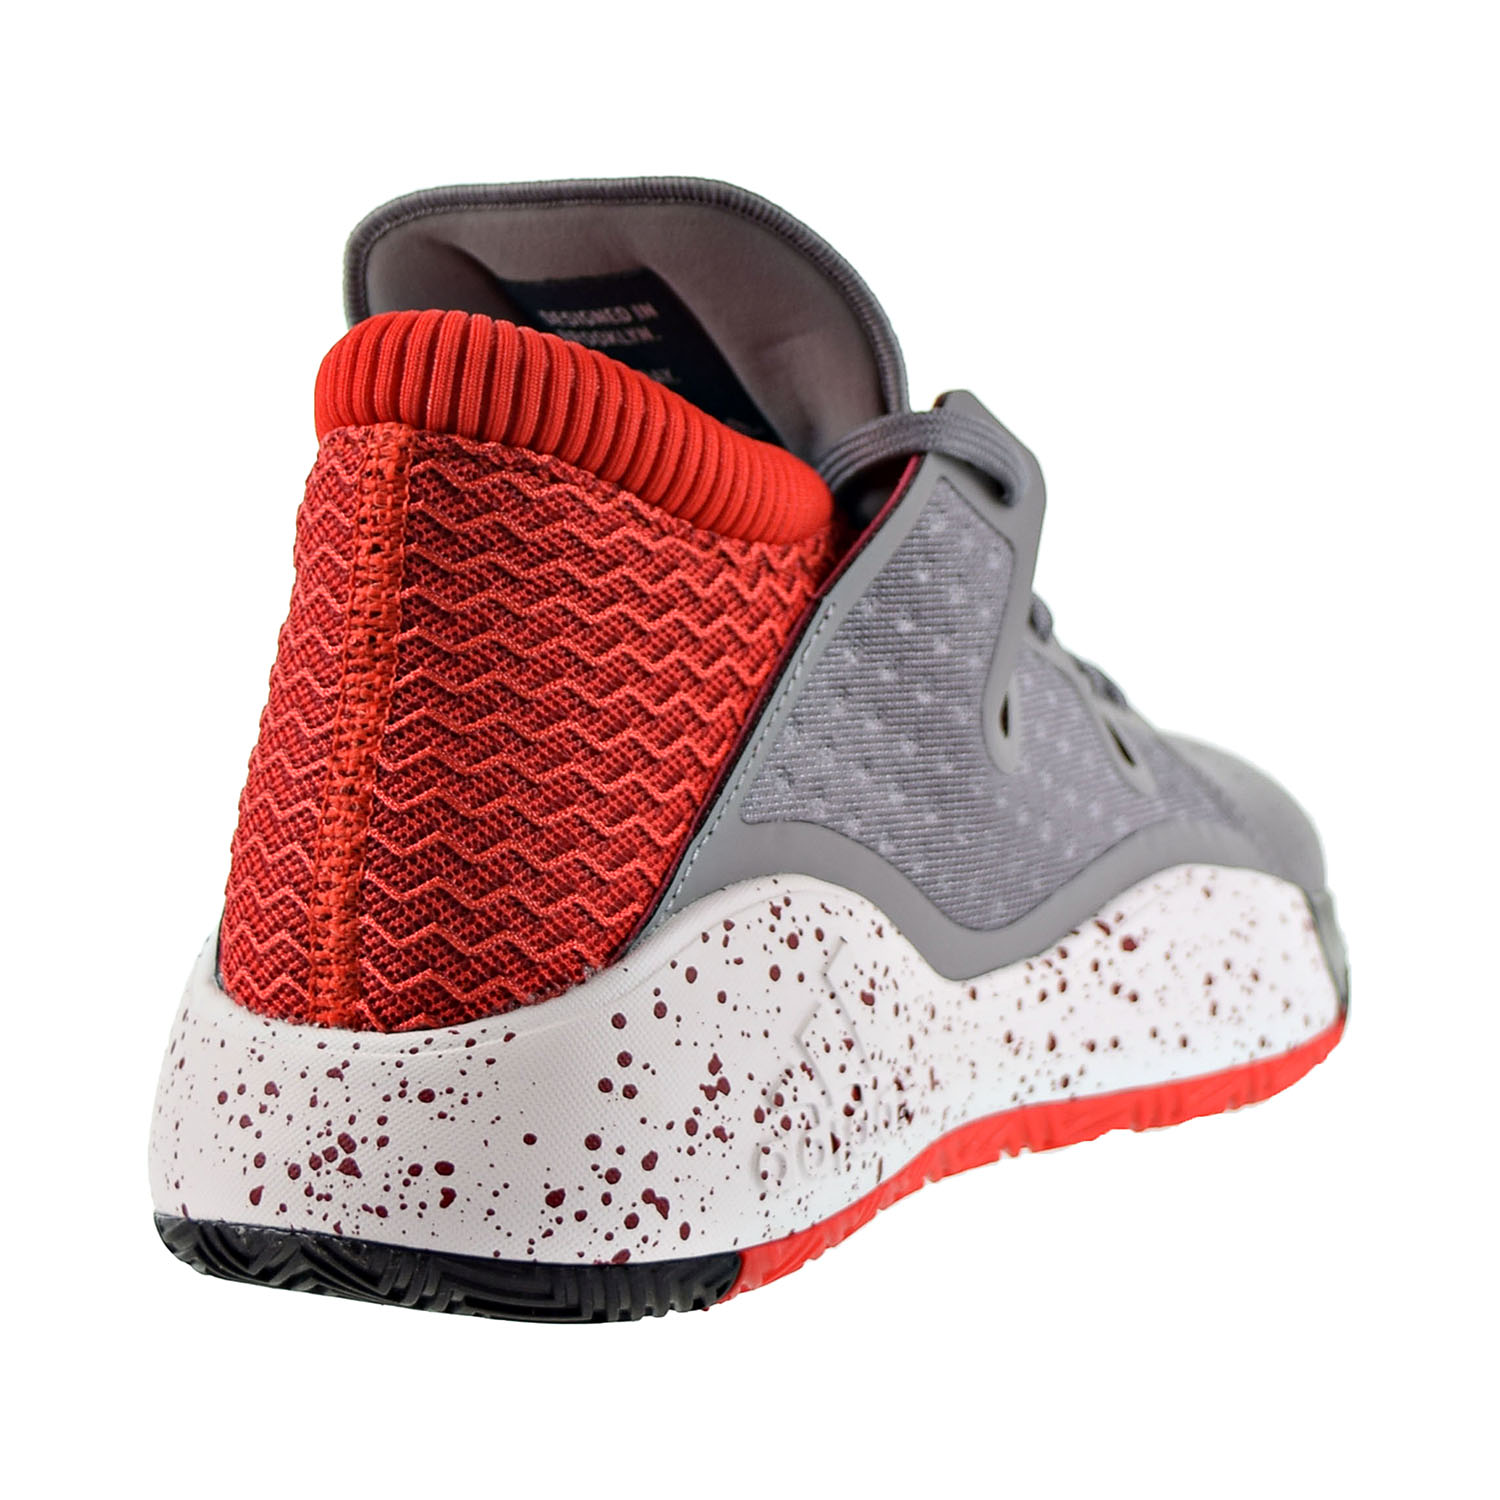 adidas pro vision basketball shoes